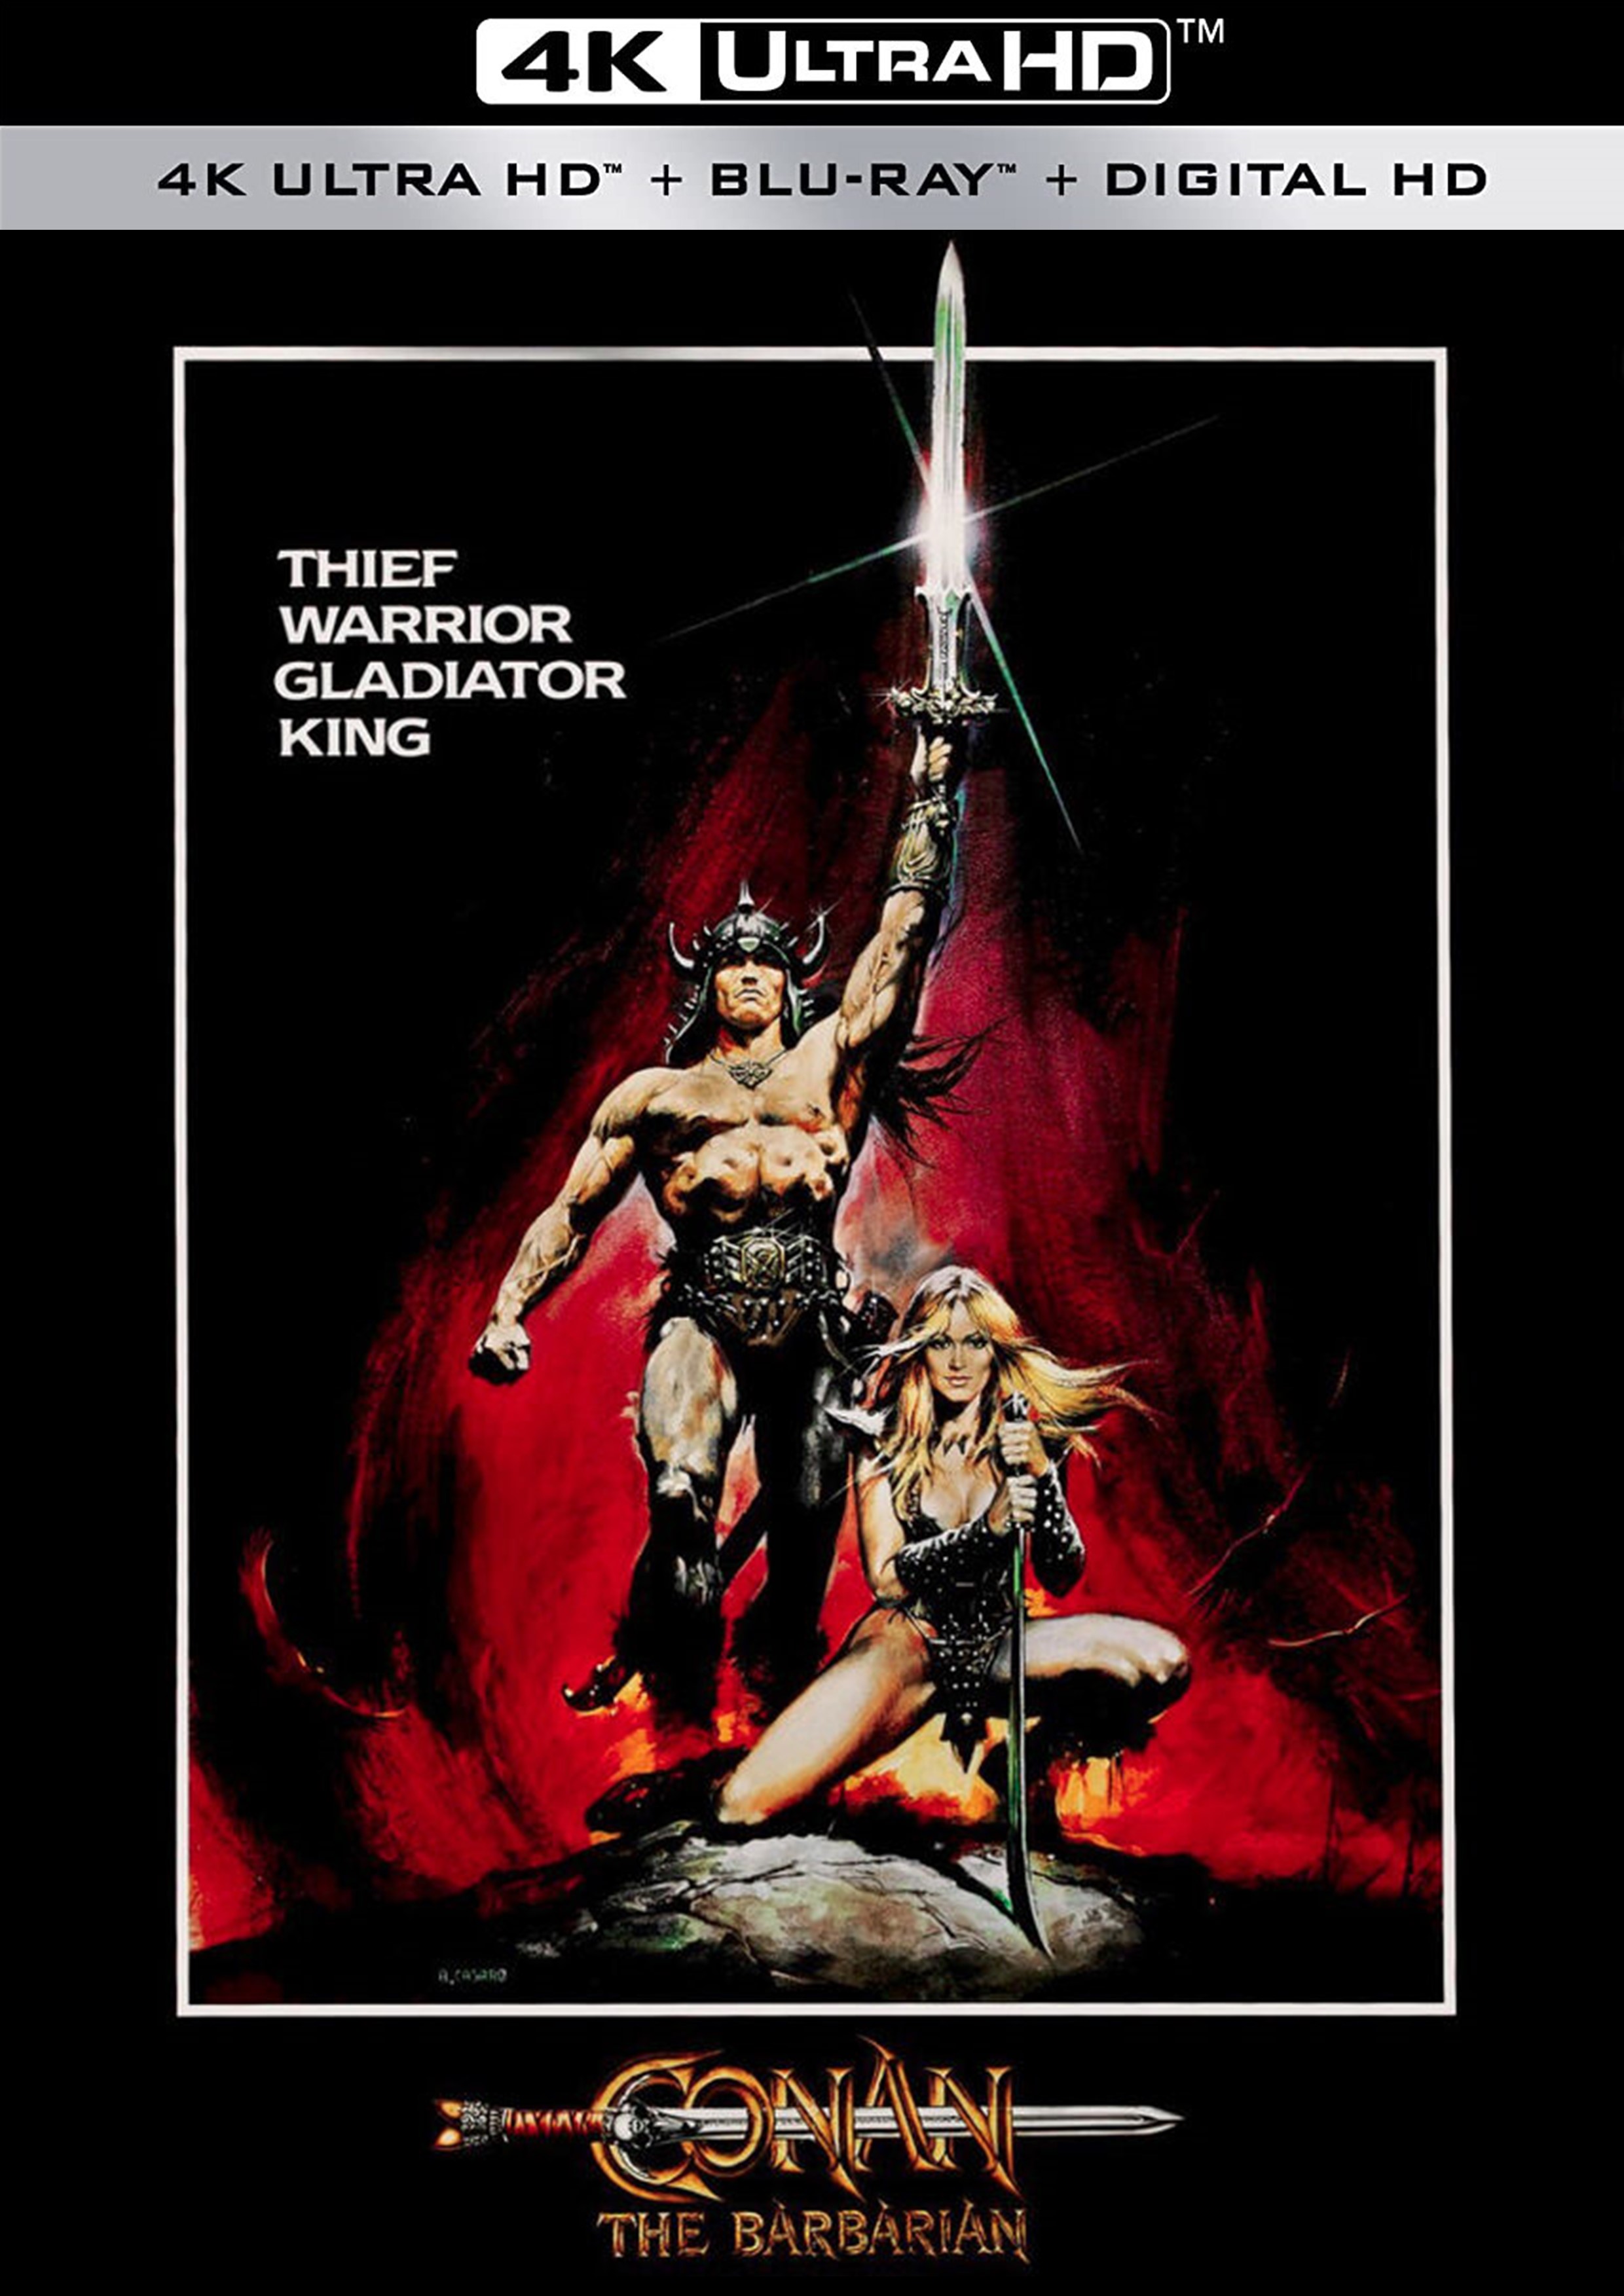 Stiahni si UHD Filmy Barbar Conan / Conan the Barbarian (1982)(CZ/EN)(2160p 4K BDRemux)(HDR10 - Dolby Vision)(EXTENDED) = CSFD 75%